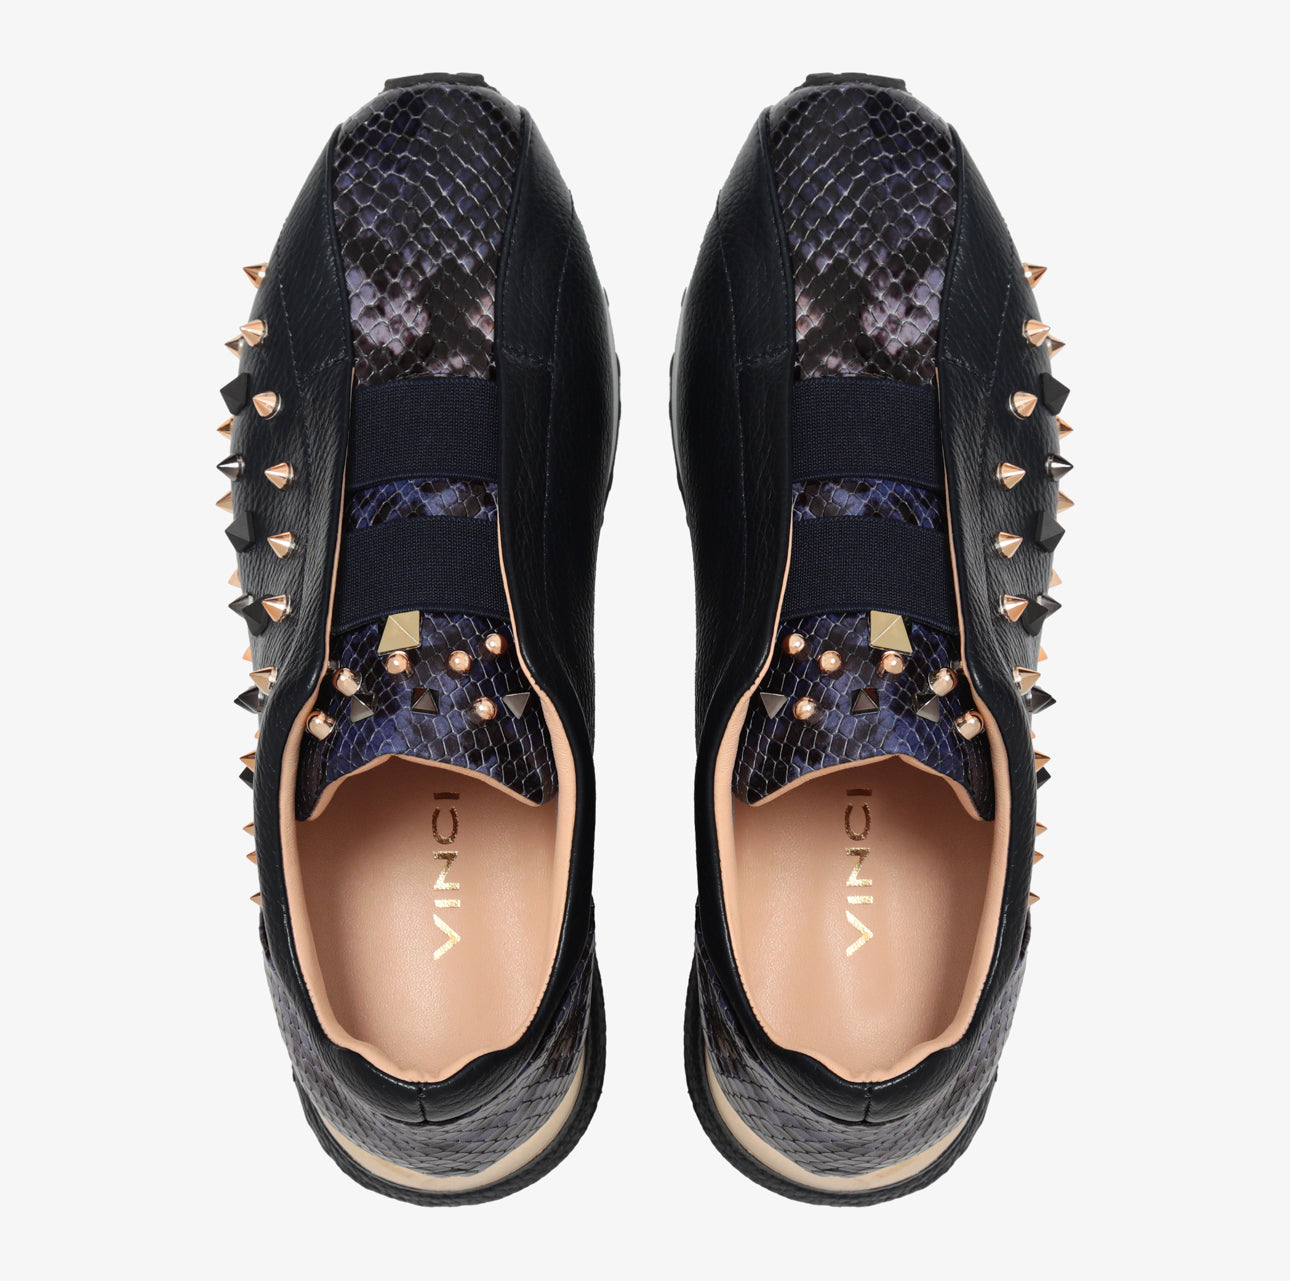 The Infanta Dark Blue Spike Leather Women Sneaker Limited Edition